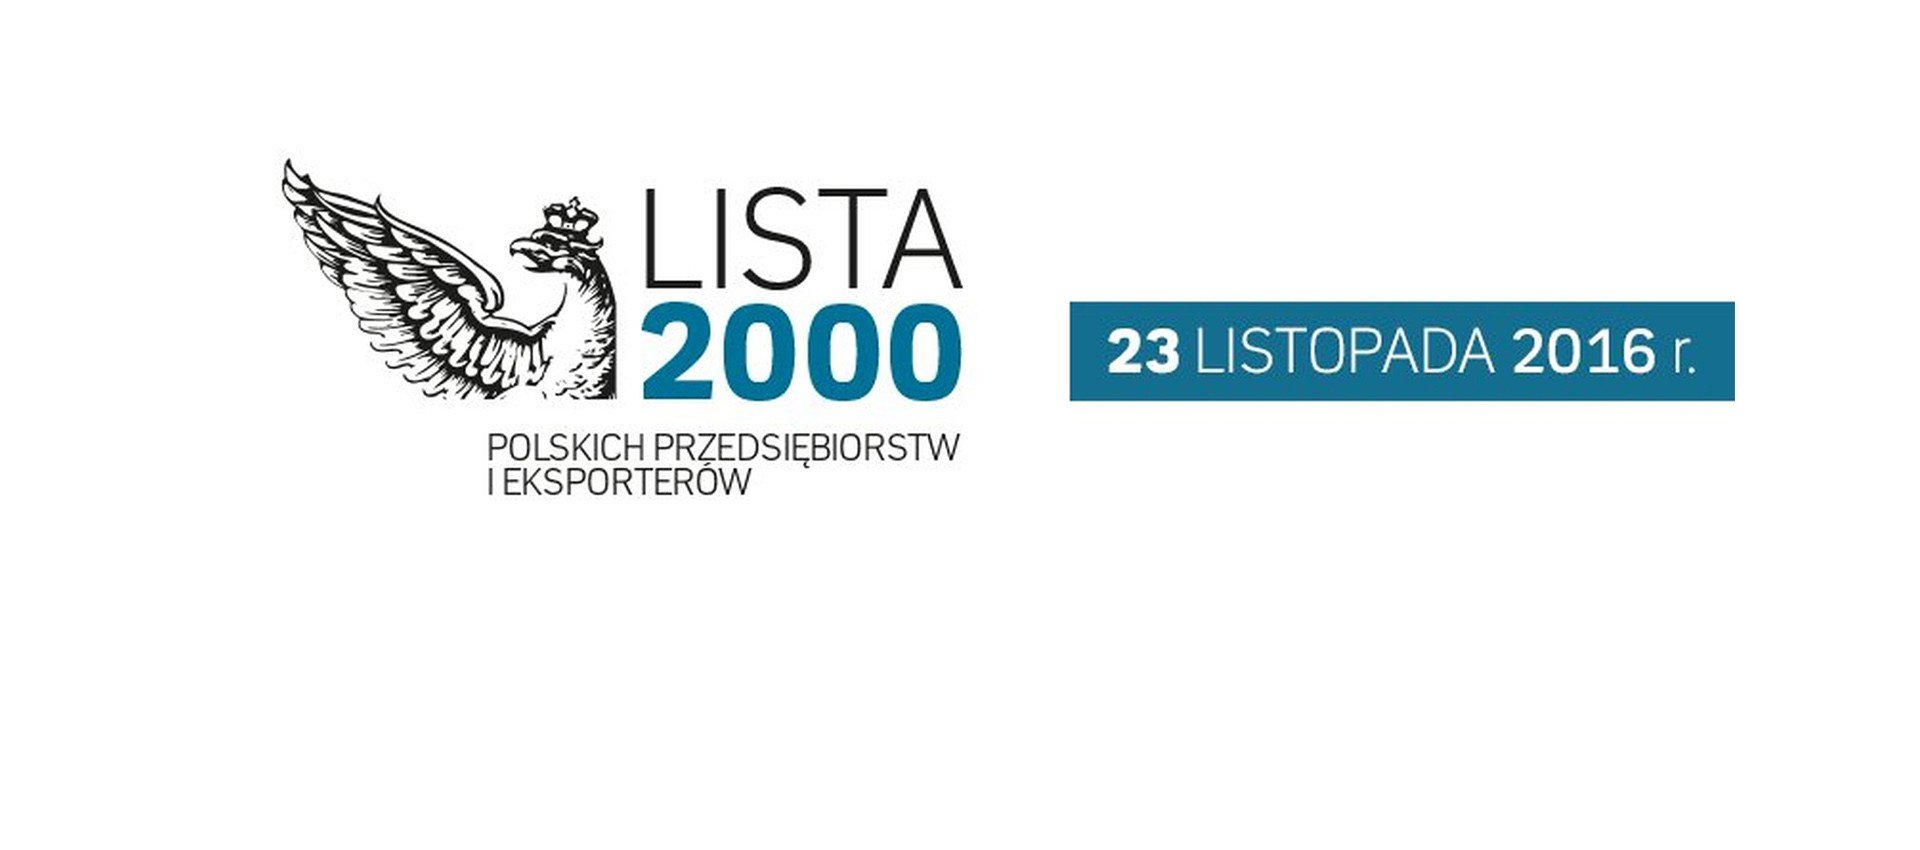 Drutex advances in Rzeczpospolita daily 2000 List.